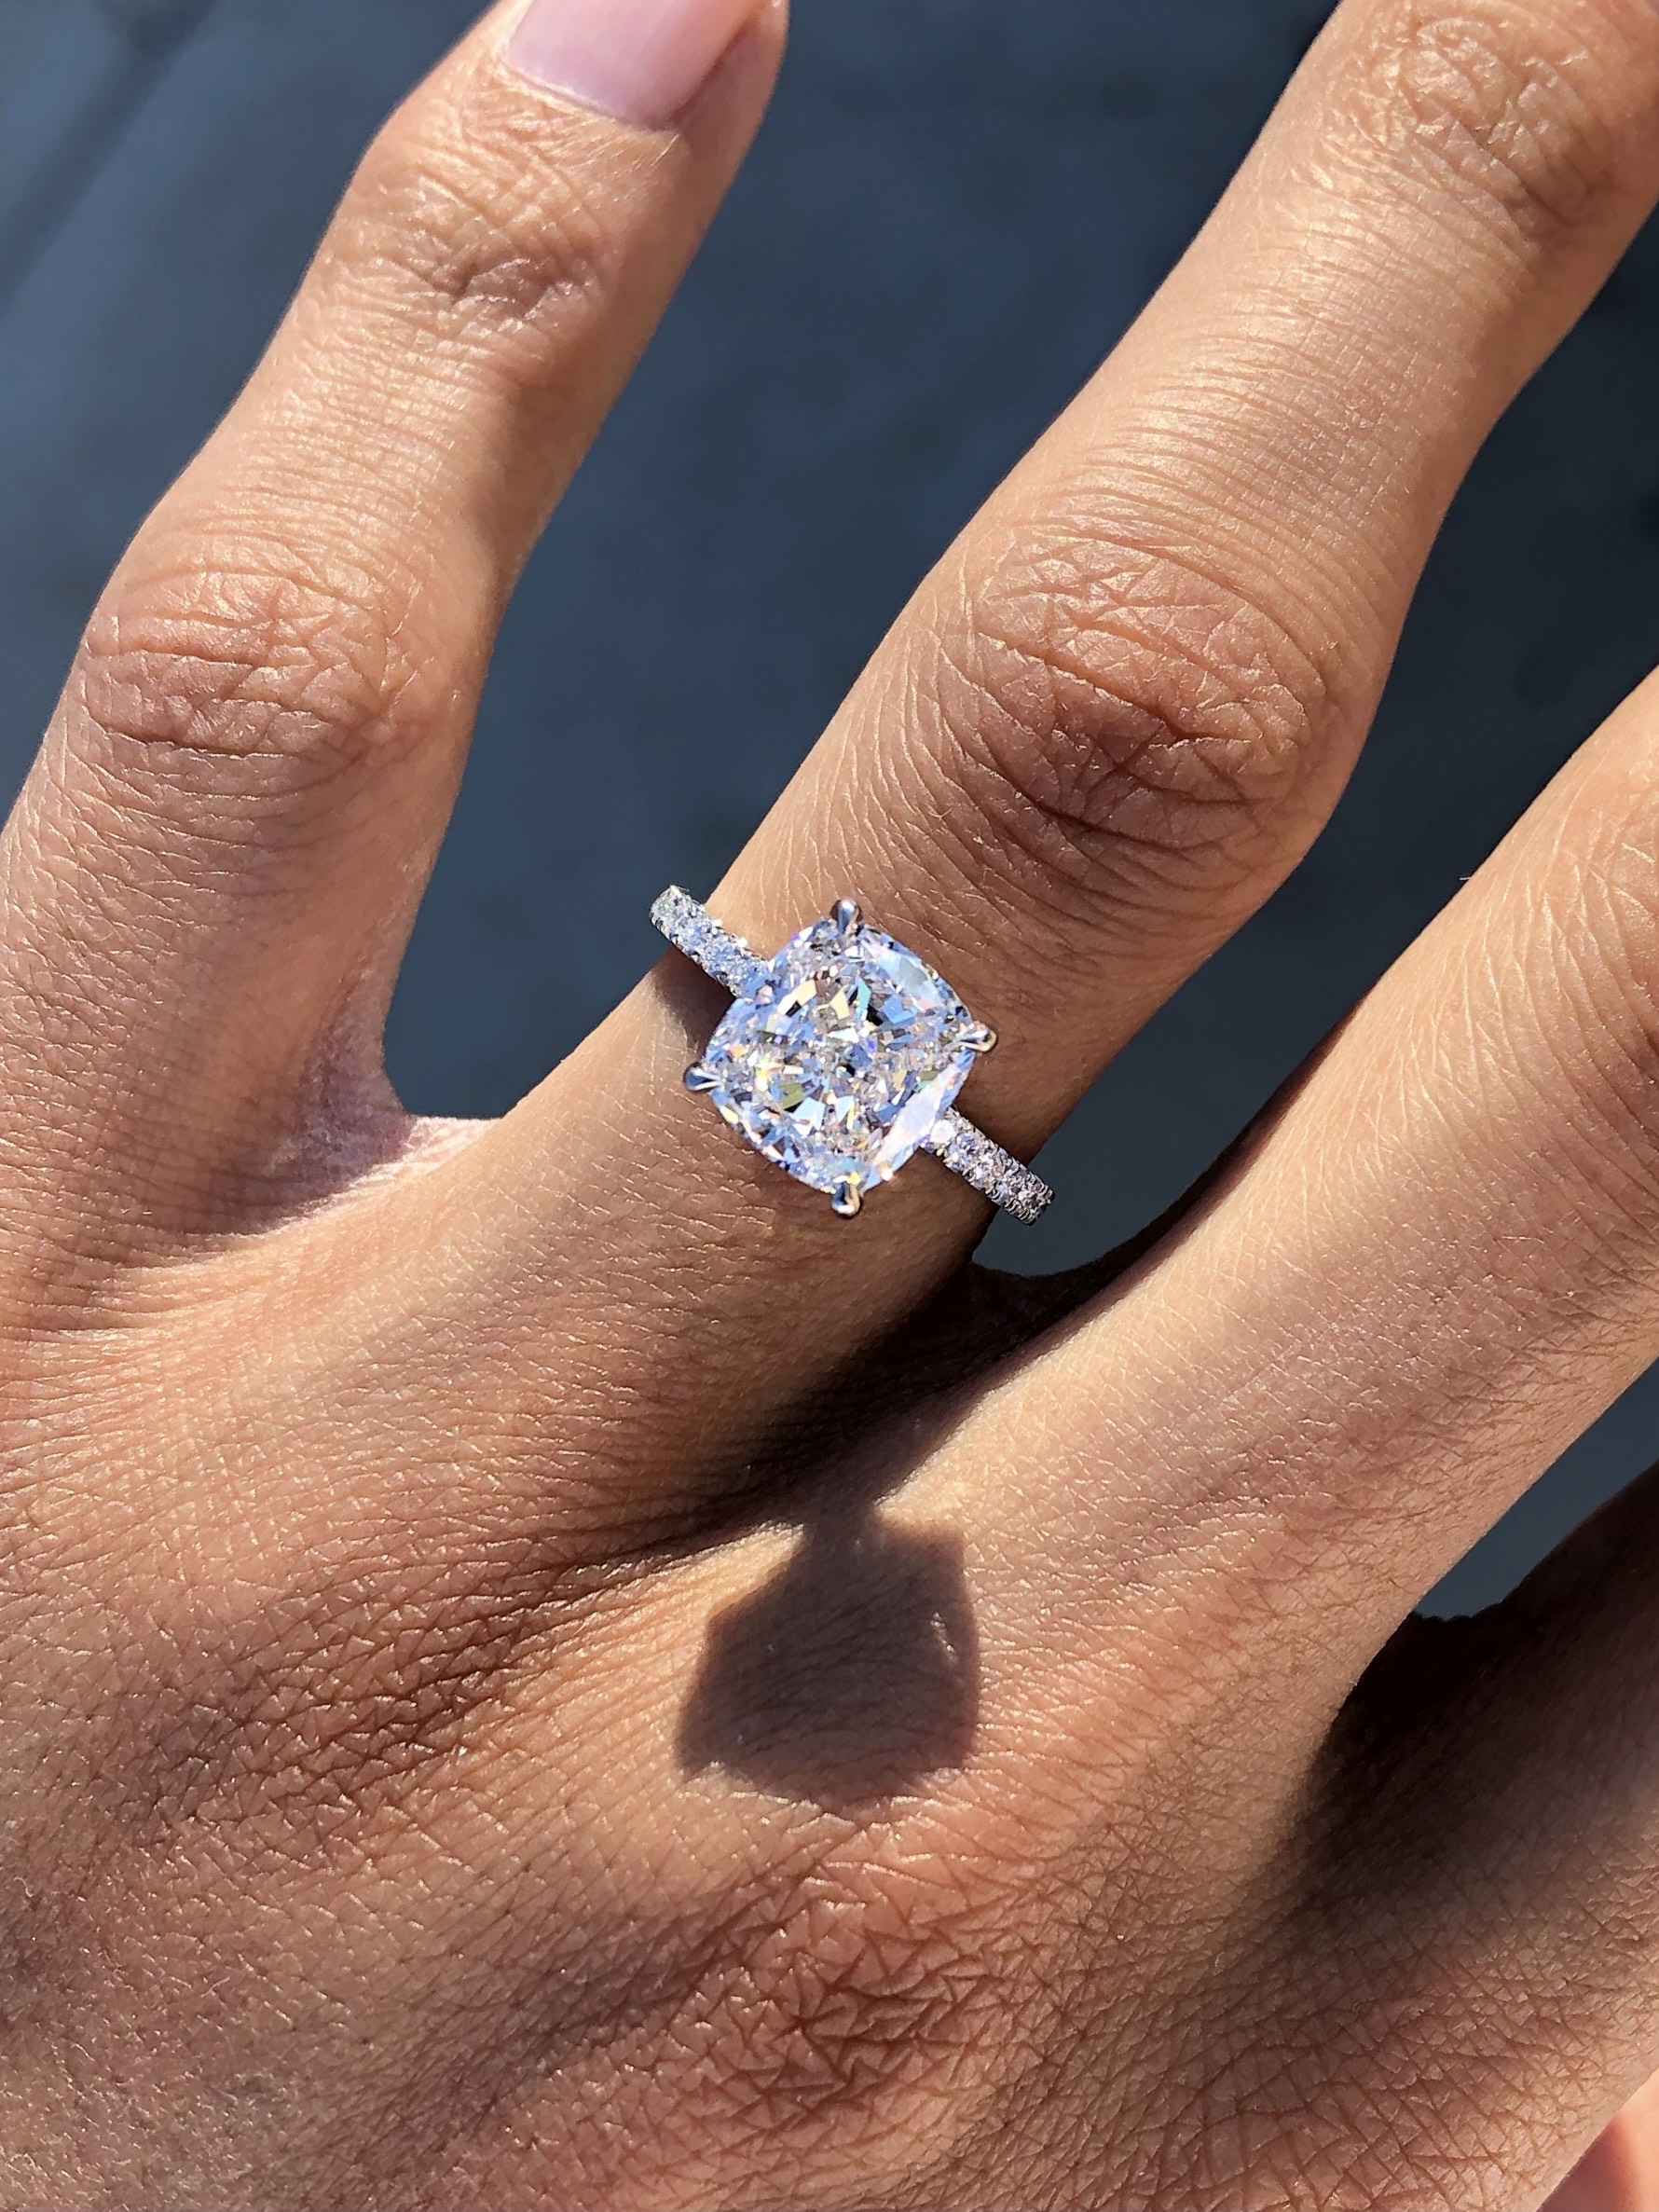 Buy Diamond Engagement Ring, 3 Carat Diamond Ring, White Gold Ring,  Engagement Gift for Her, Diamond Gold Ring, Engagement, Big Diamond Stone  Online in India - Etsy